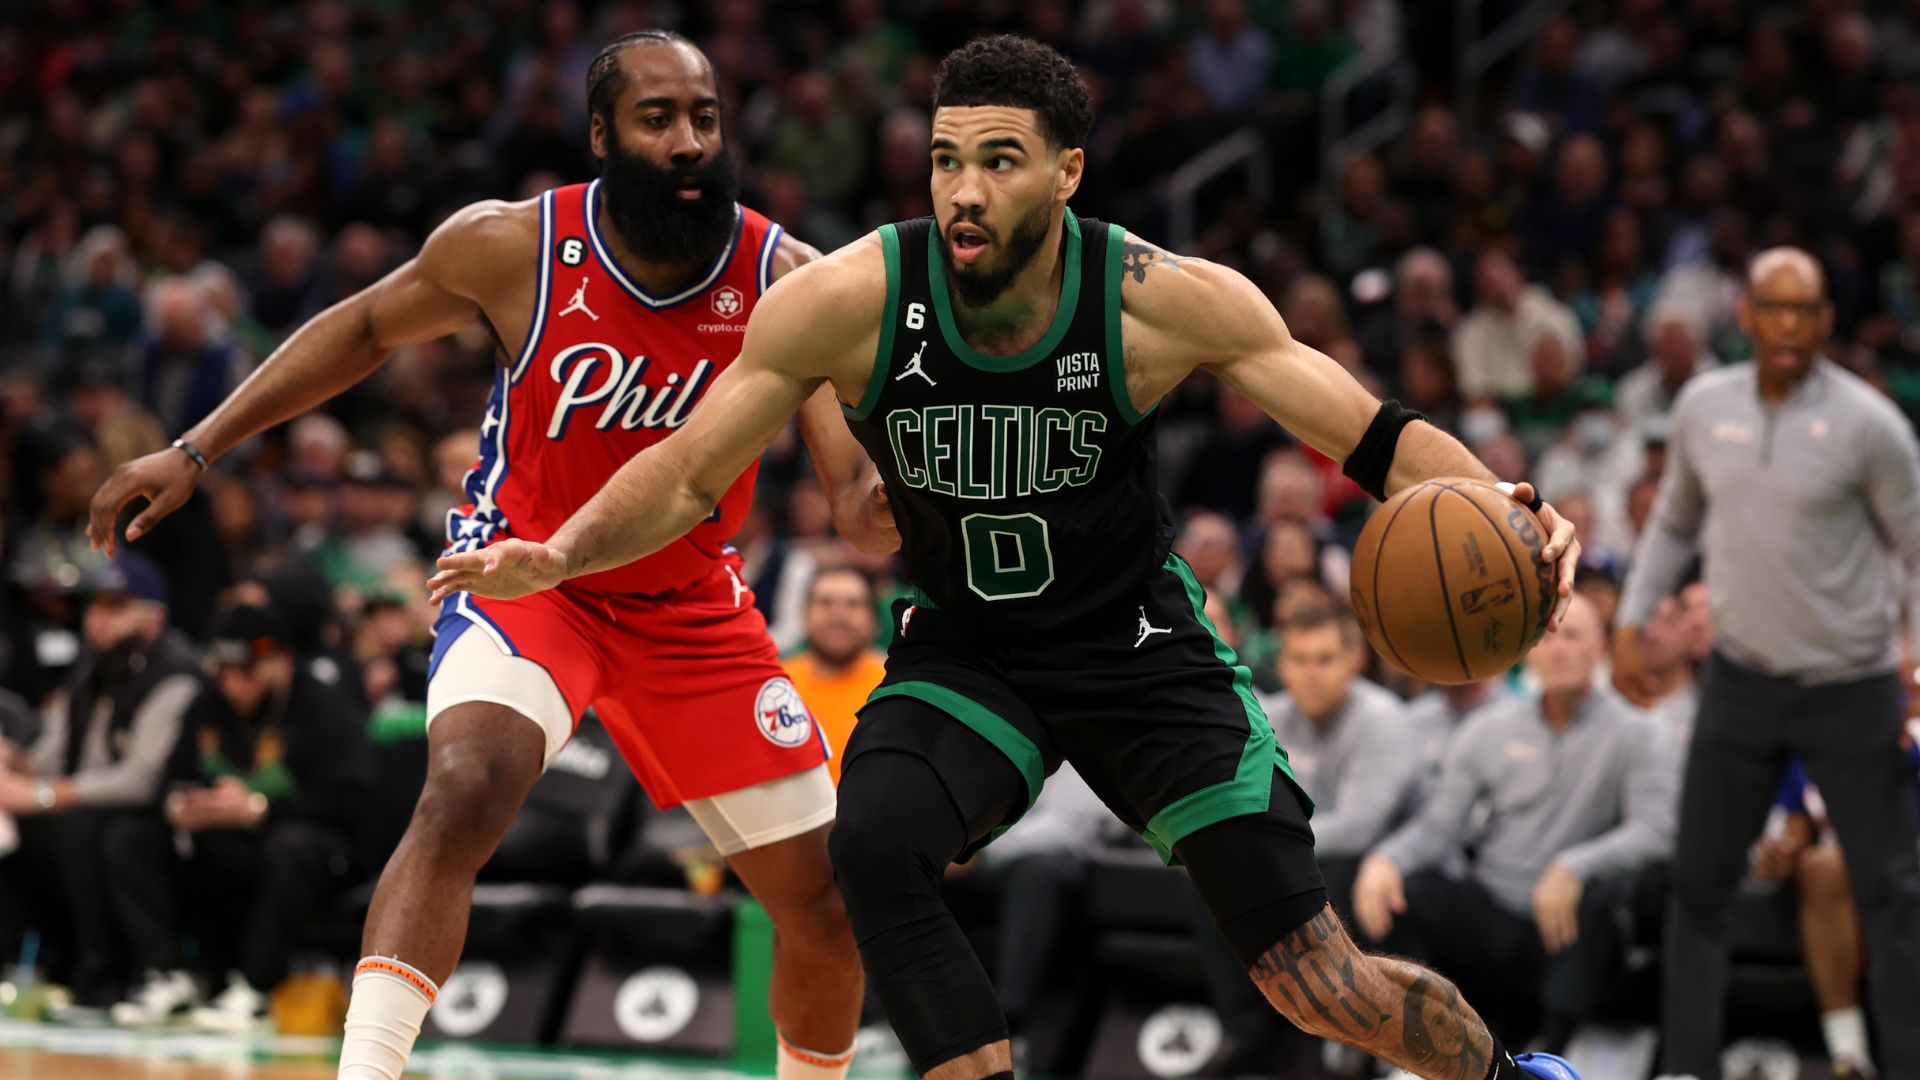 NBA Playoffs: Boston Celtics vence mais uma e preocupa Miami Heat